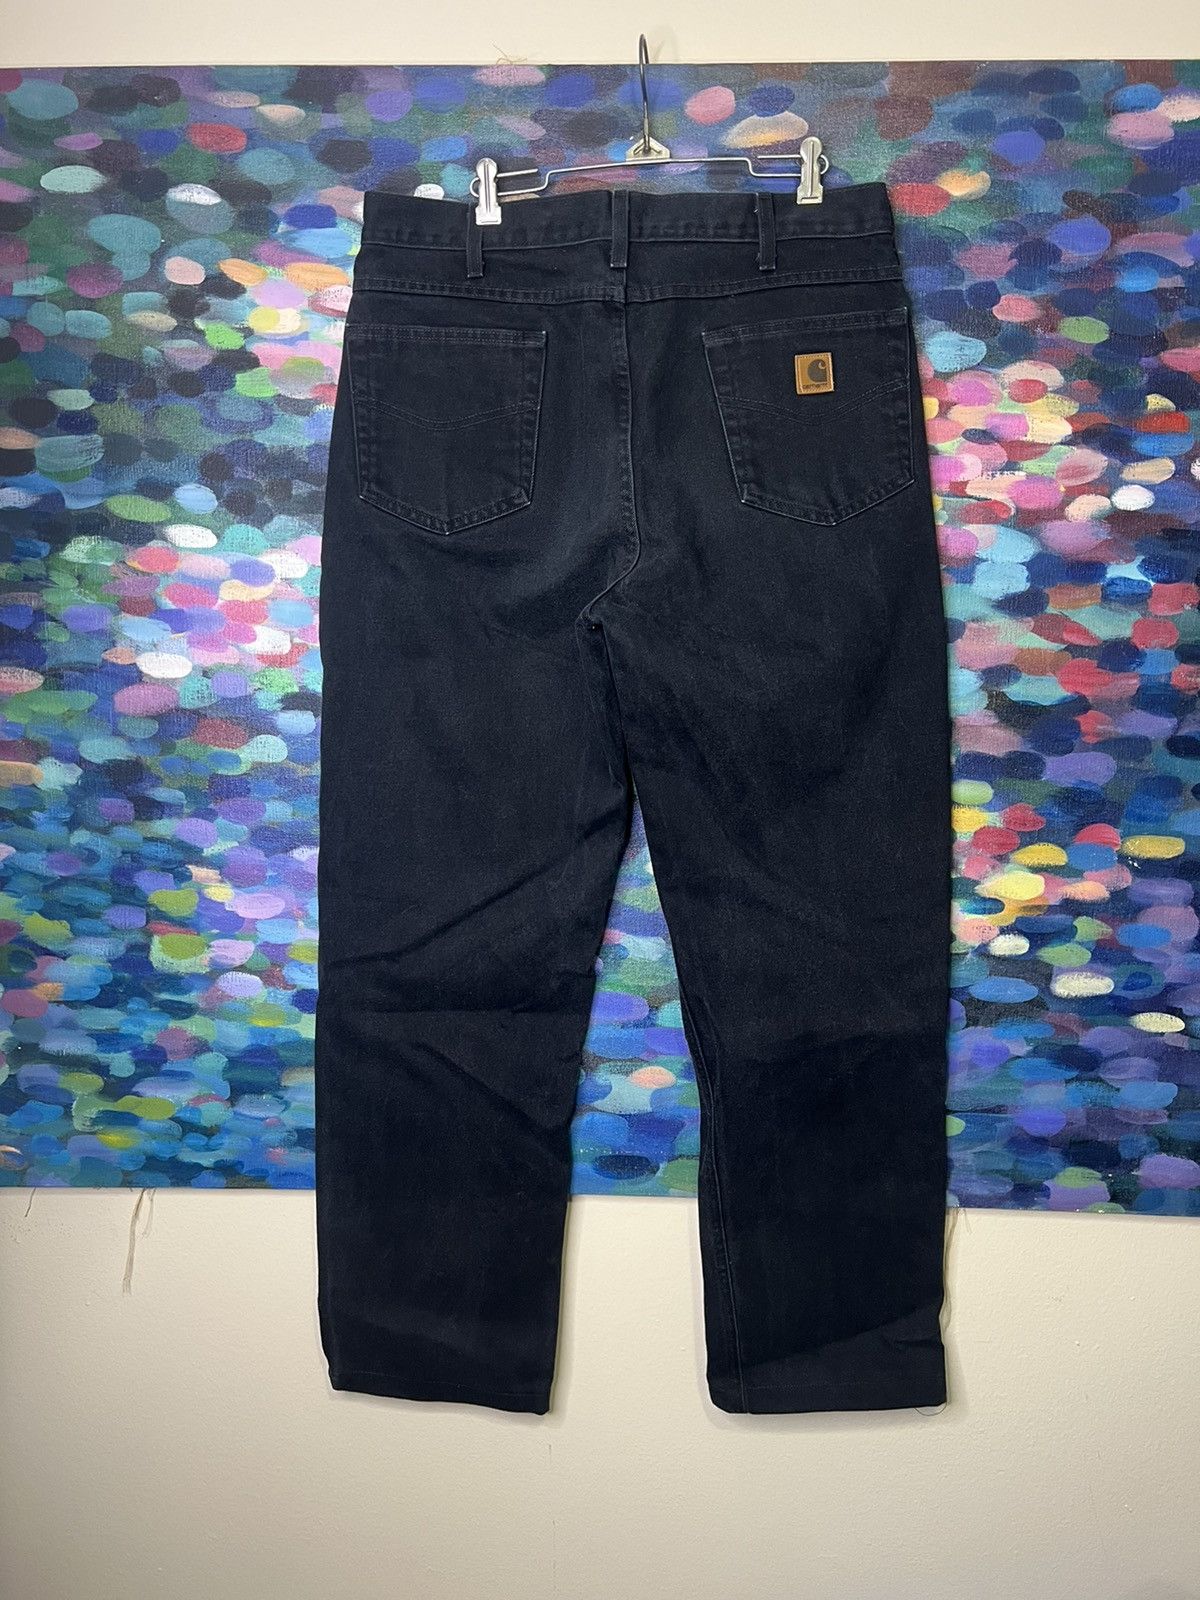 Vintage Carhartt Jeans Mens 36x34 Black Denim Size US 36 / EU 52 - 6 Thumbnail